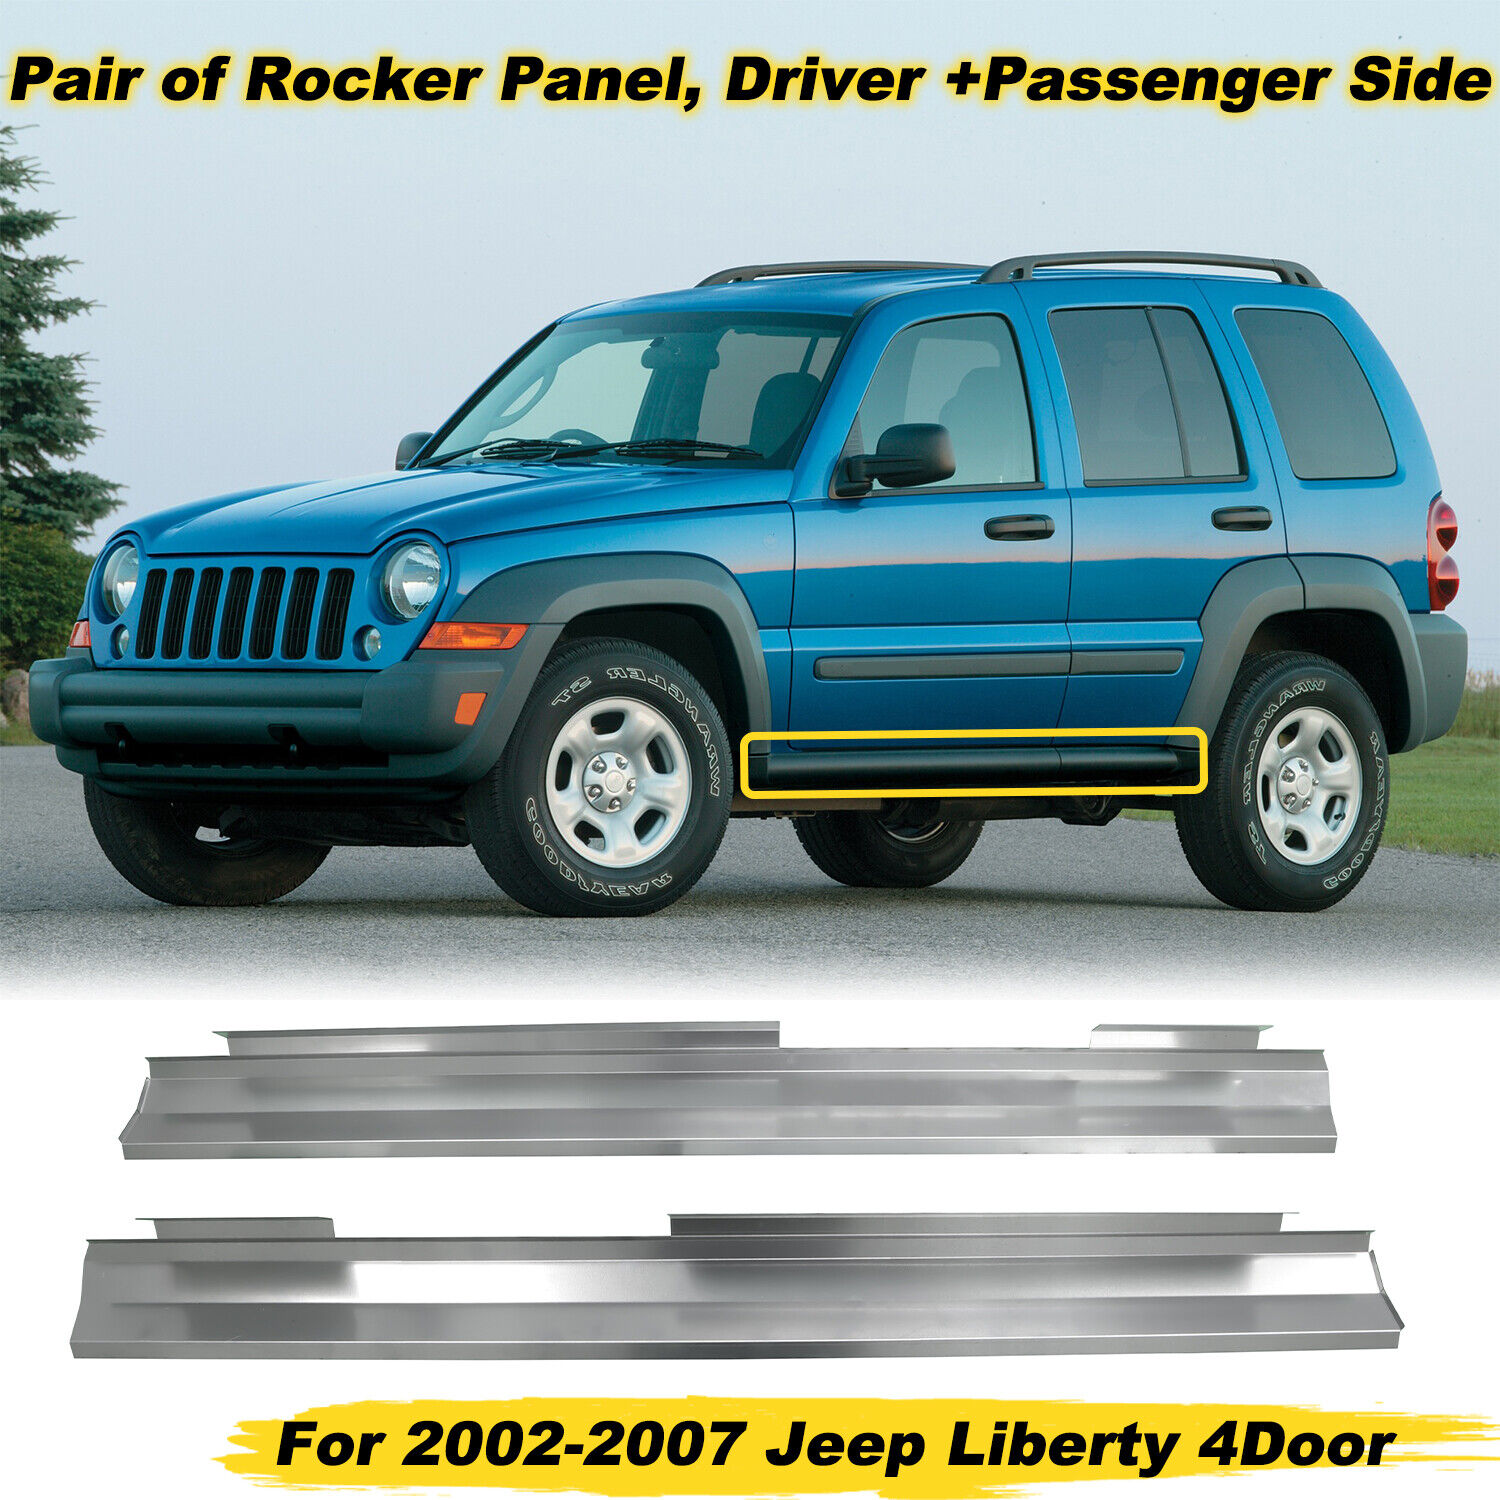 For Jeep Liberty 4Door 2002-2007 Slip-on Rocker Panel Driver +Passenger Side